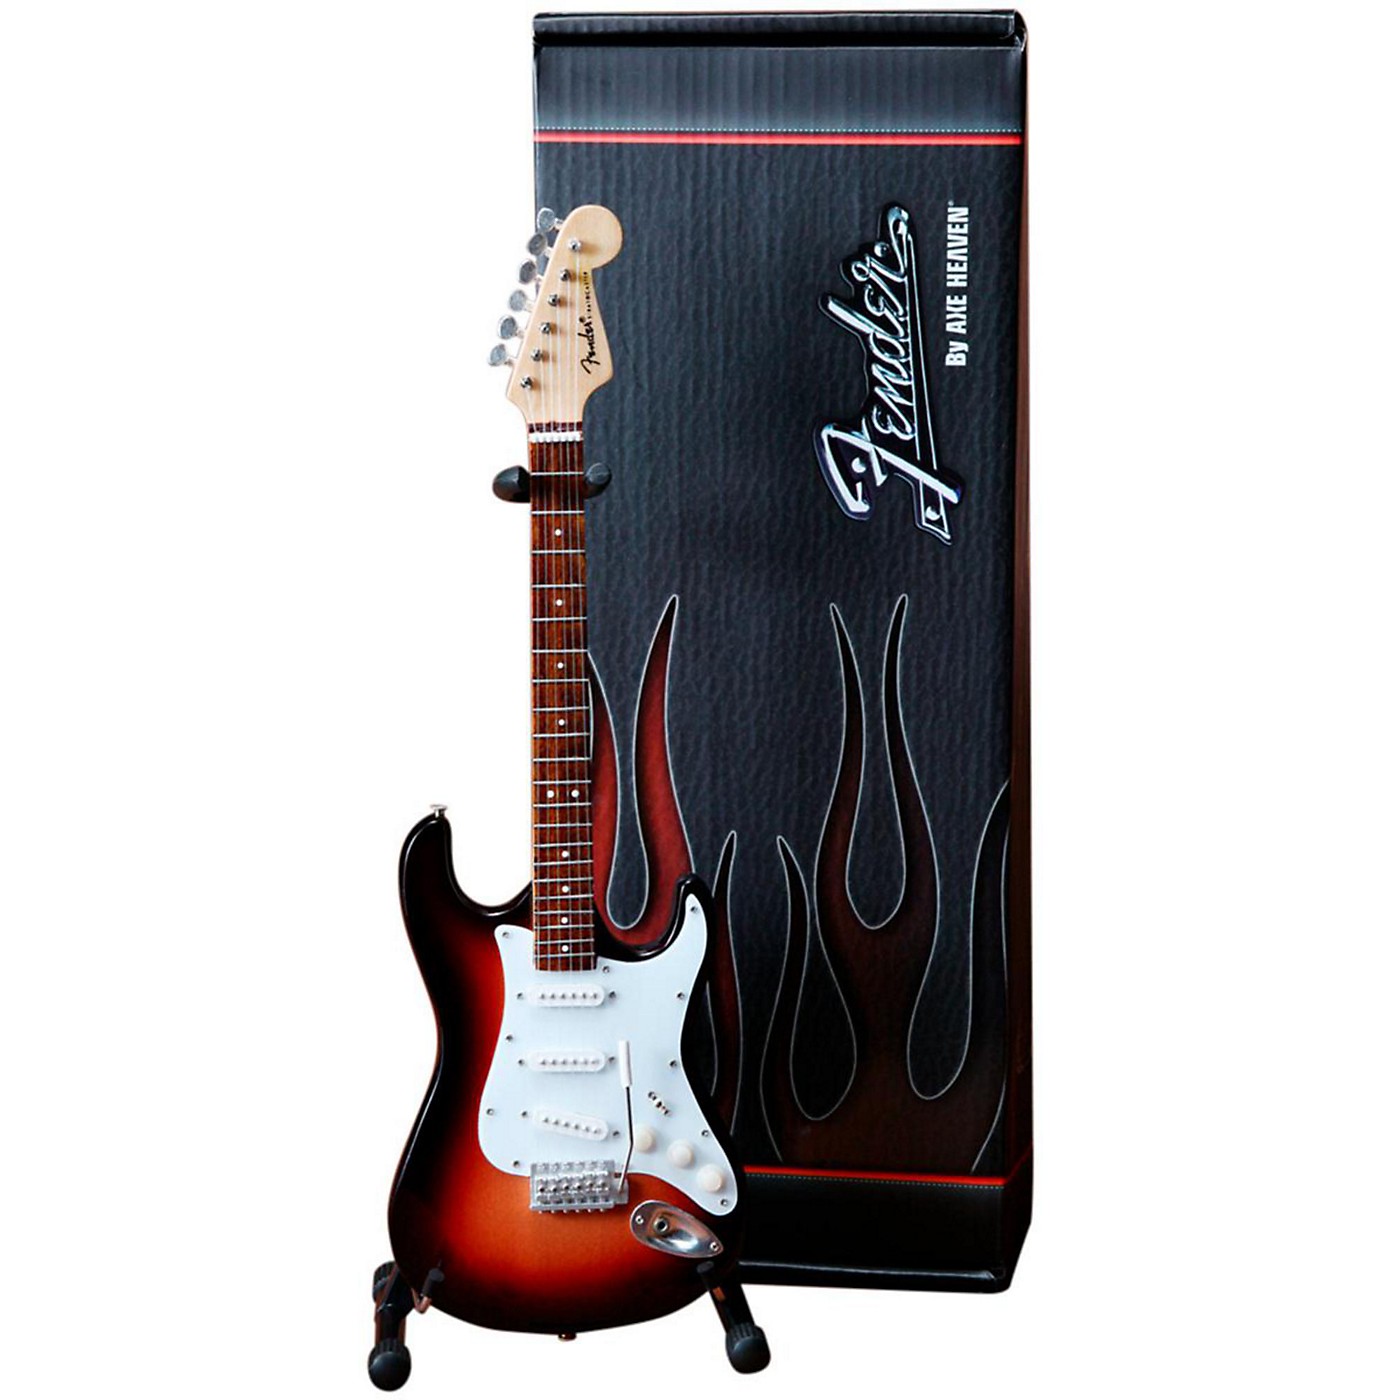 Axe Heaven Fender Stratocaster Sunburst Miniature Guitar Replica Collectible thumbnail